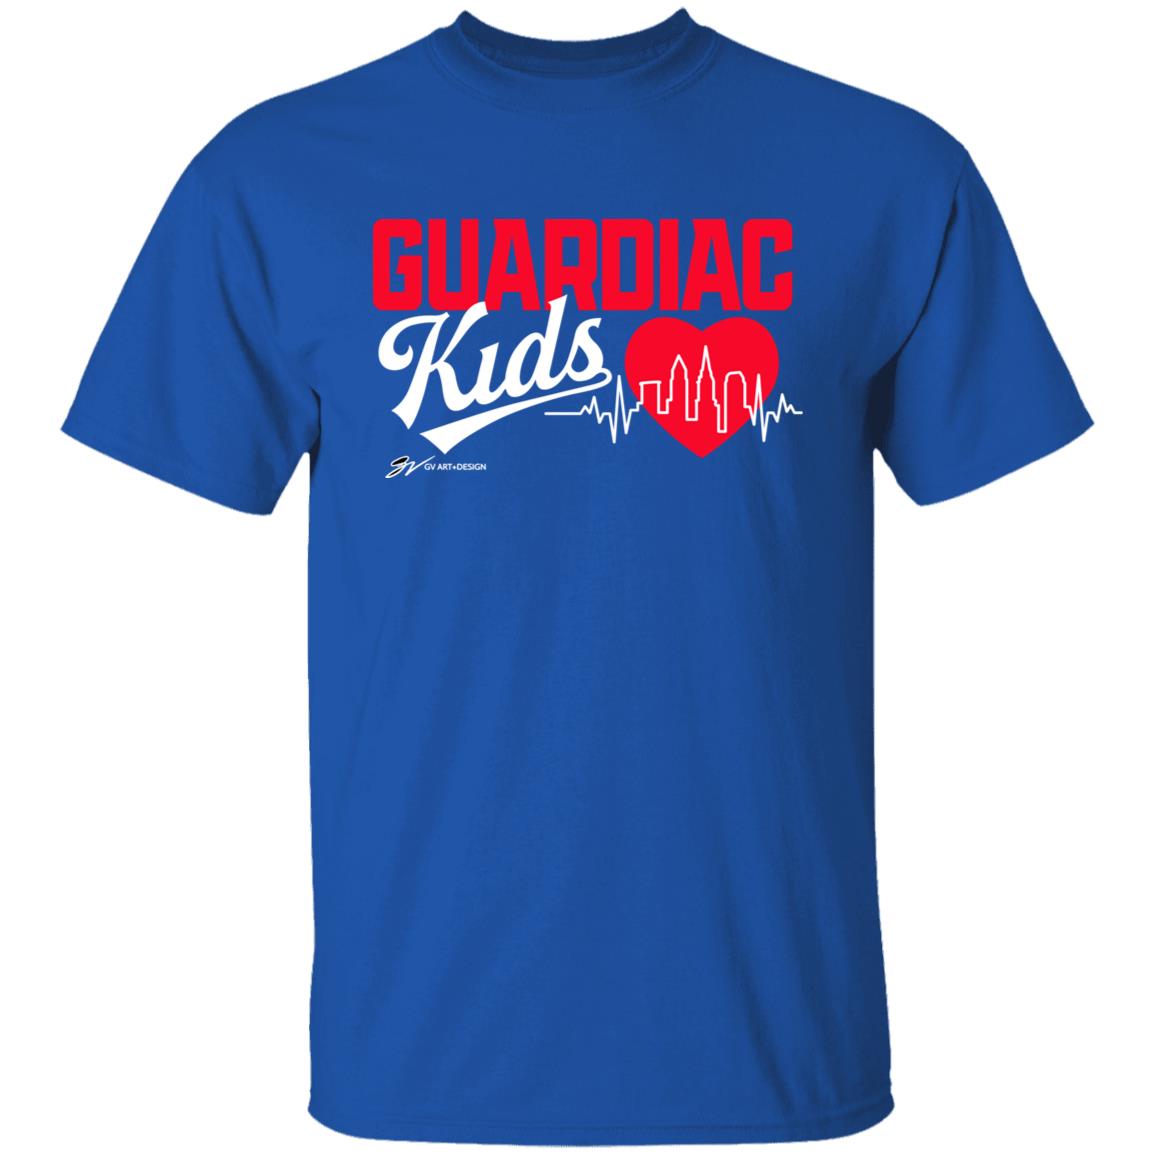 GVartwork Store Cleveland Guardiac Kids Shirt